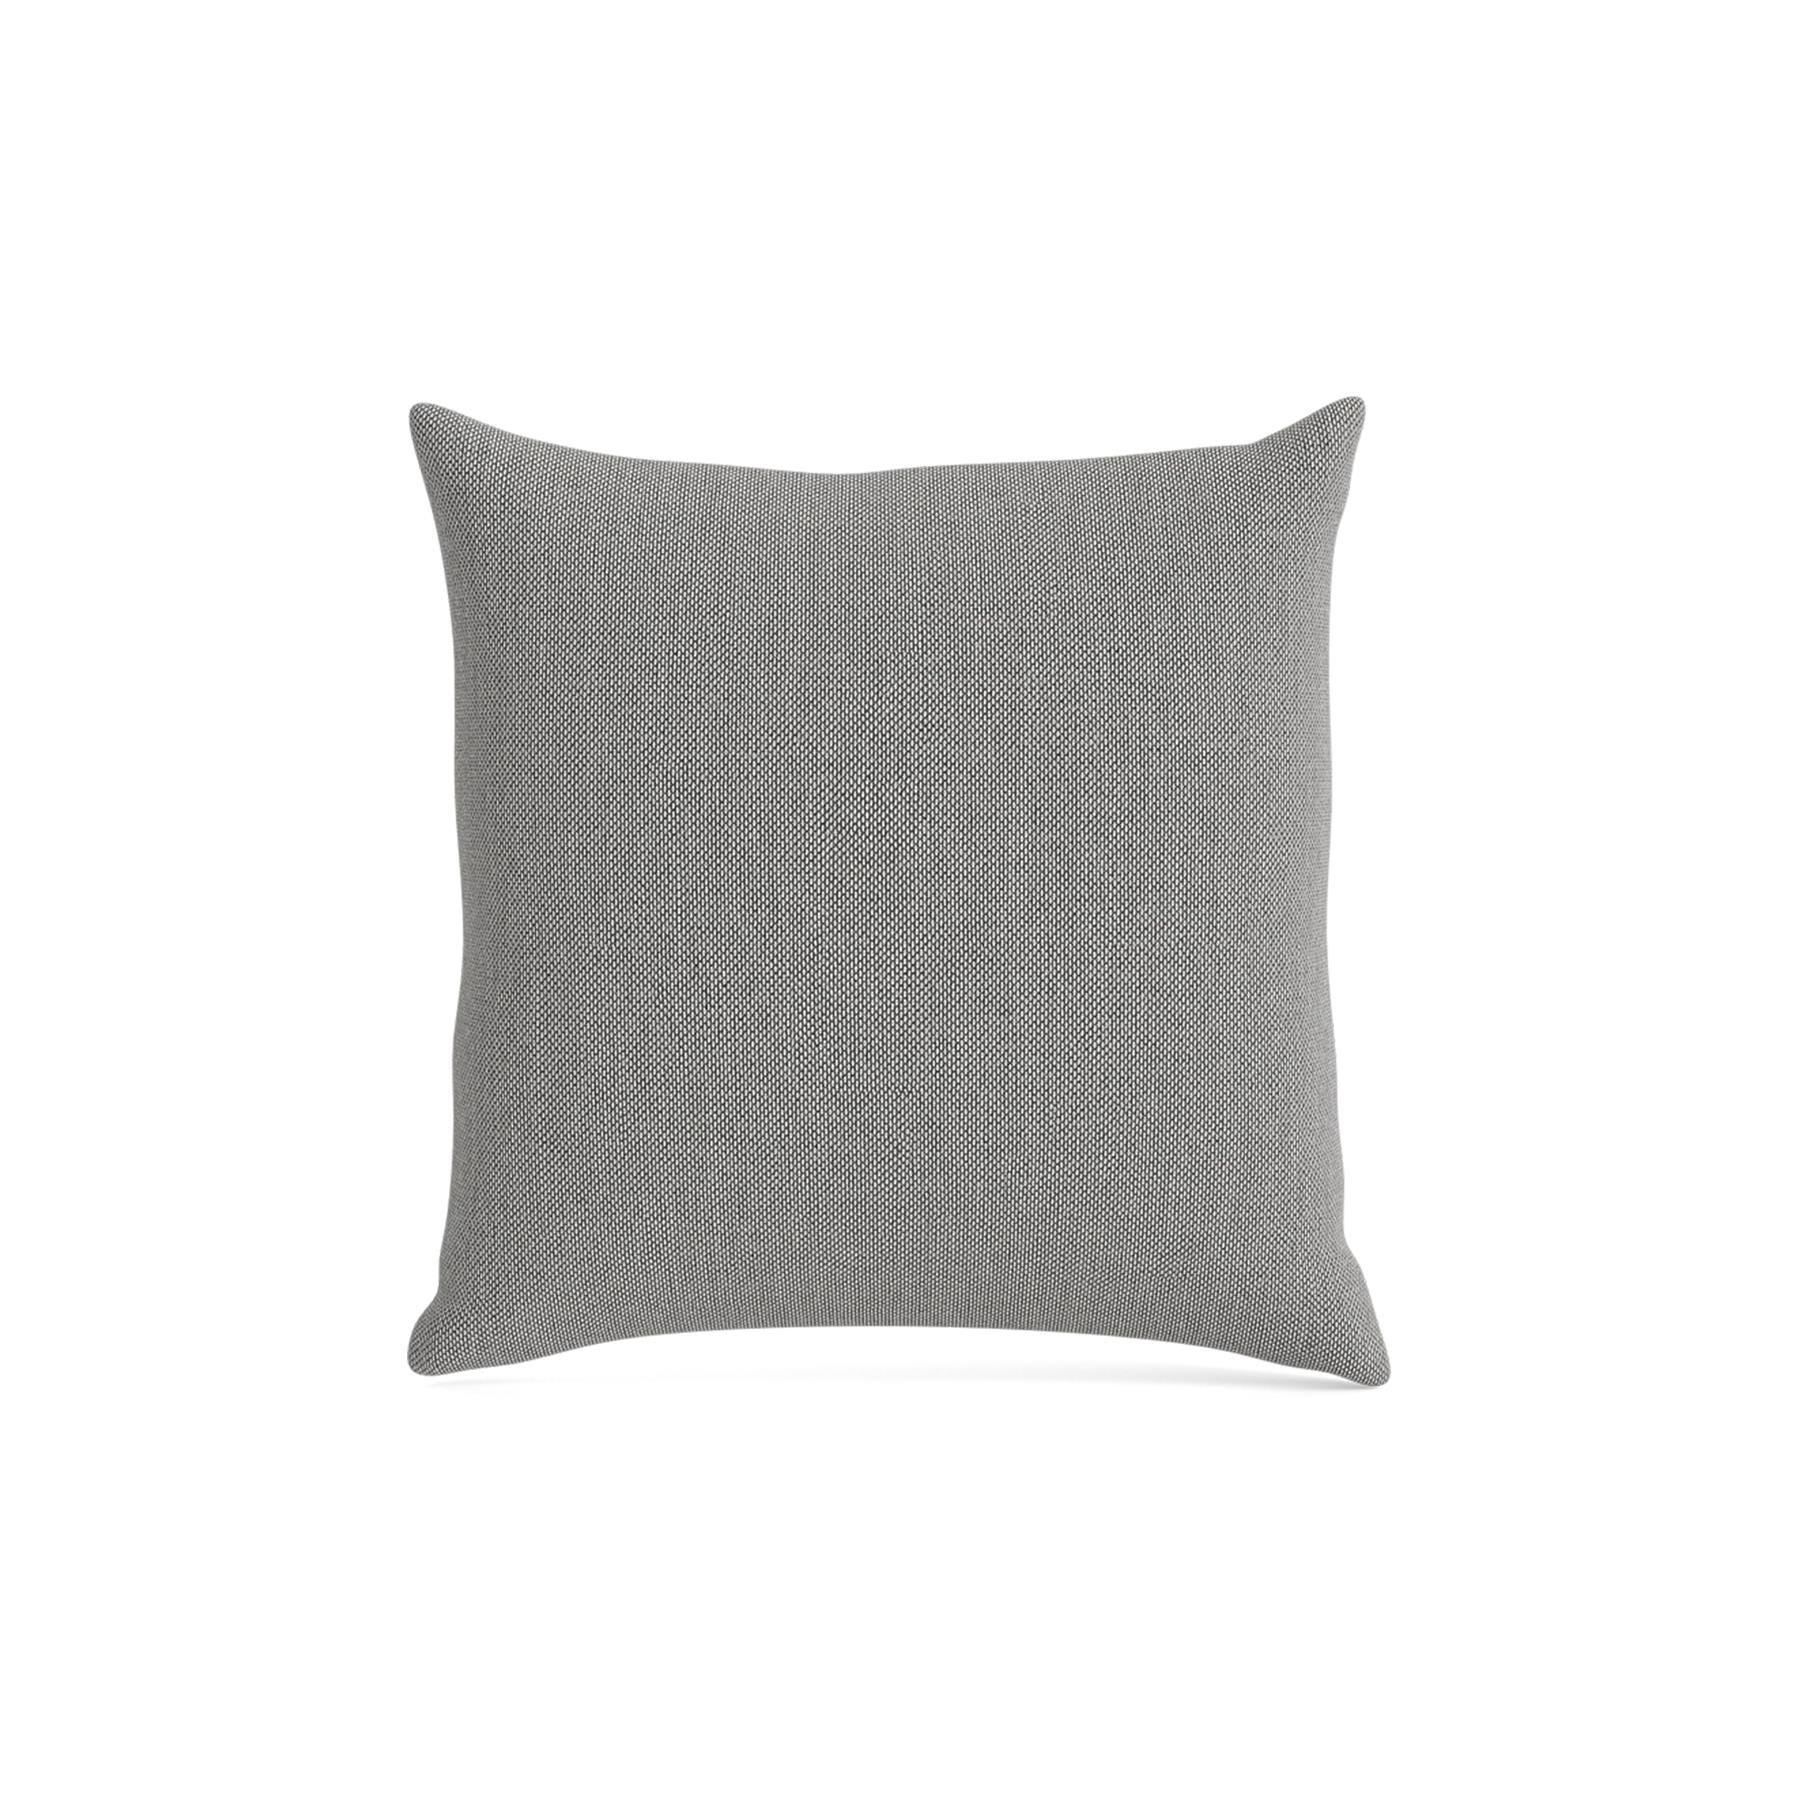 Make Nordic Pillow 40cmx40cm Rewool 128 Down And Fibers Grey